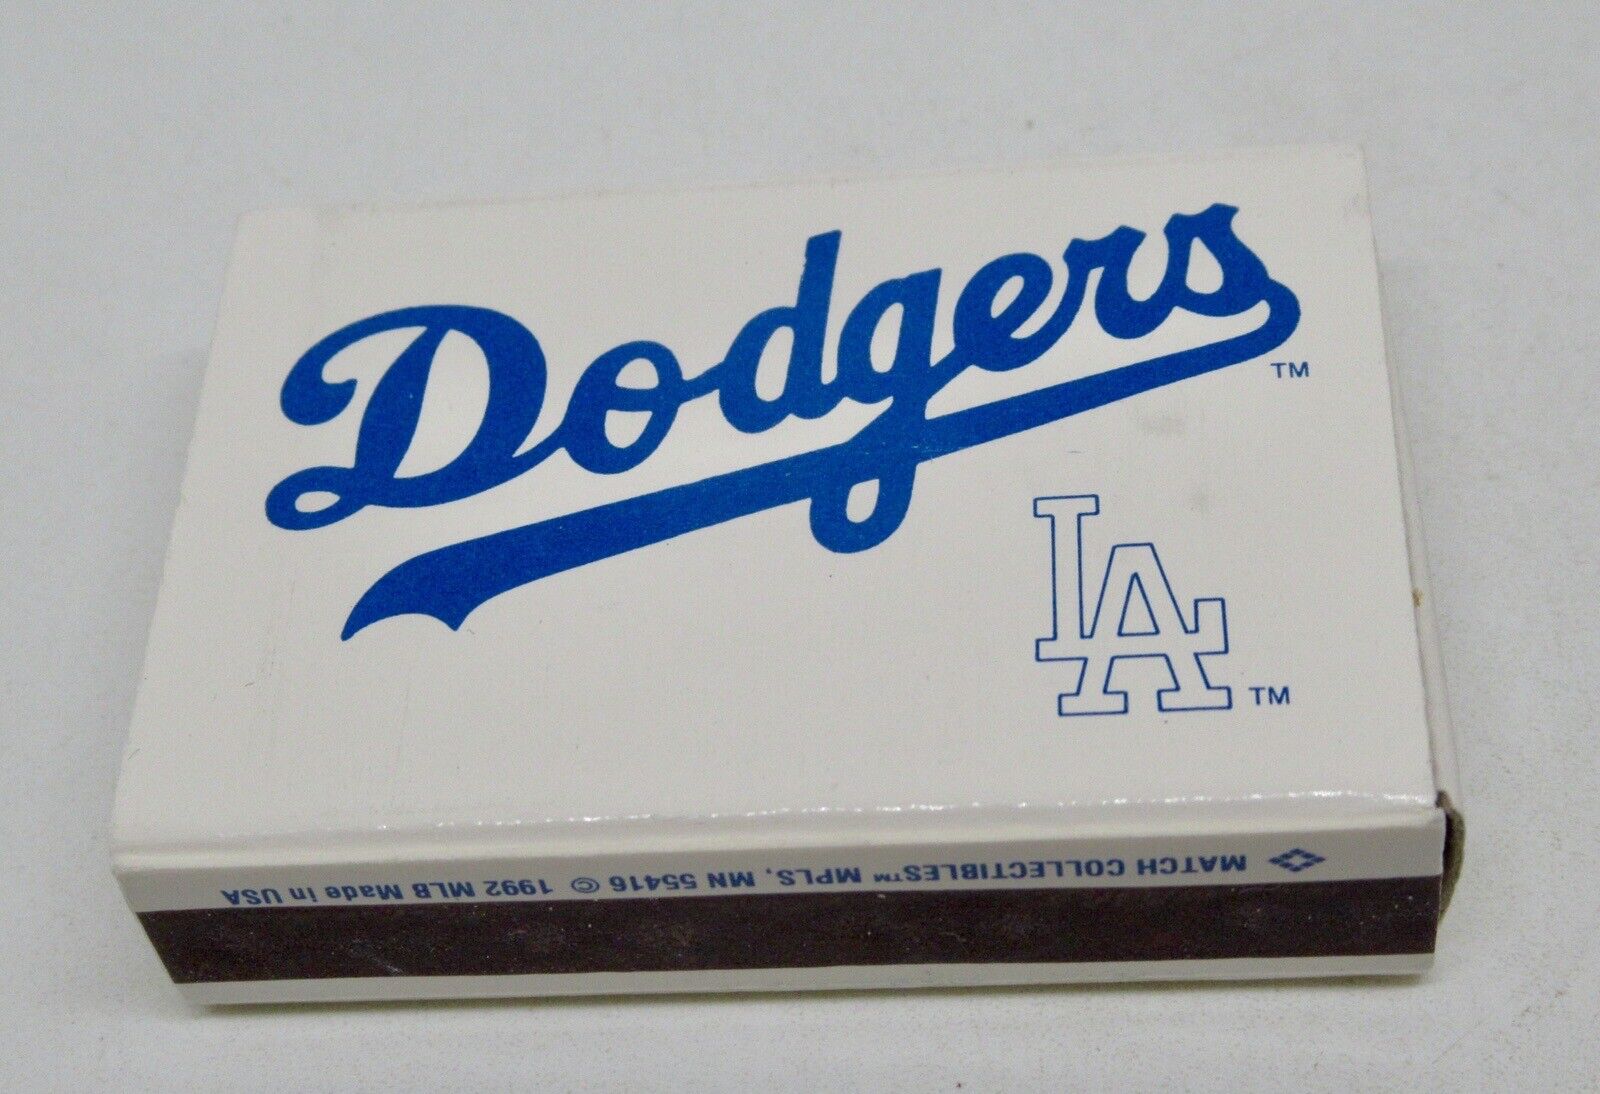 Los Angeles Dodgers Major League Baseball Team FULL Matchbook / Matchbox